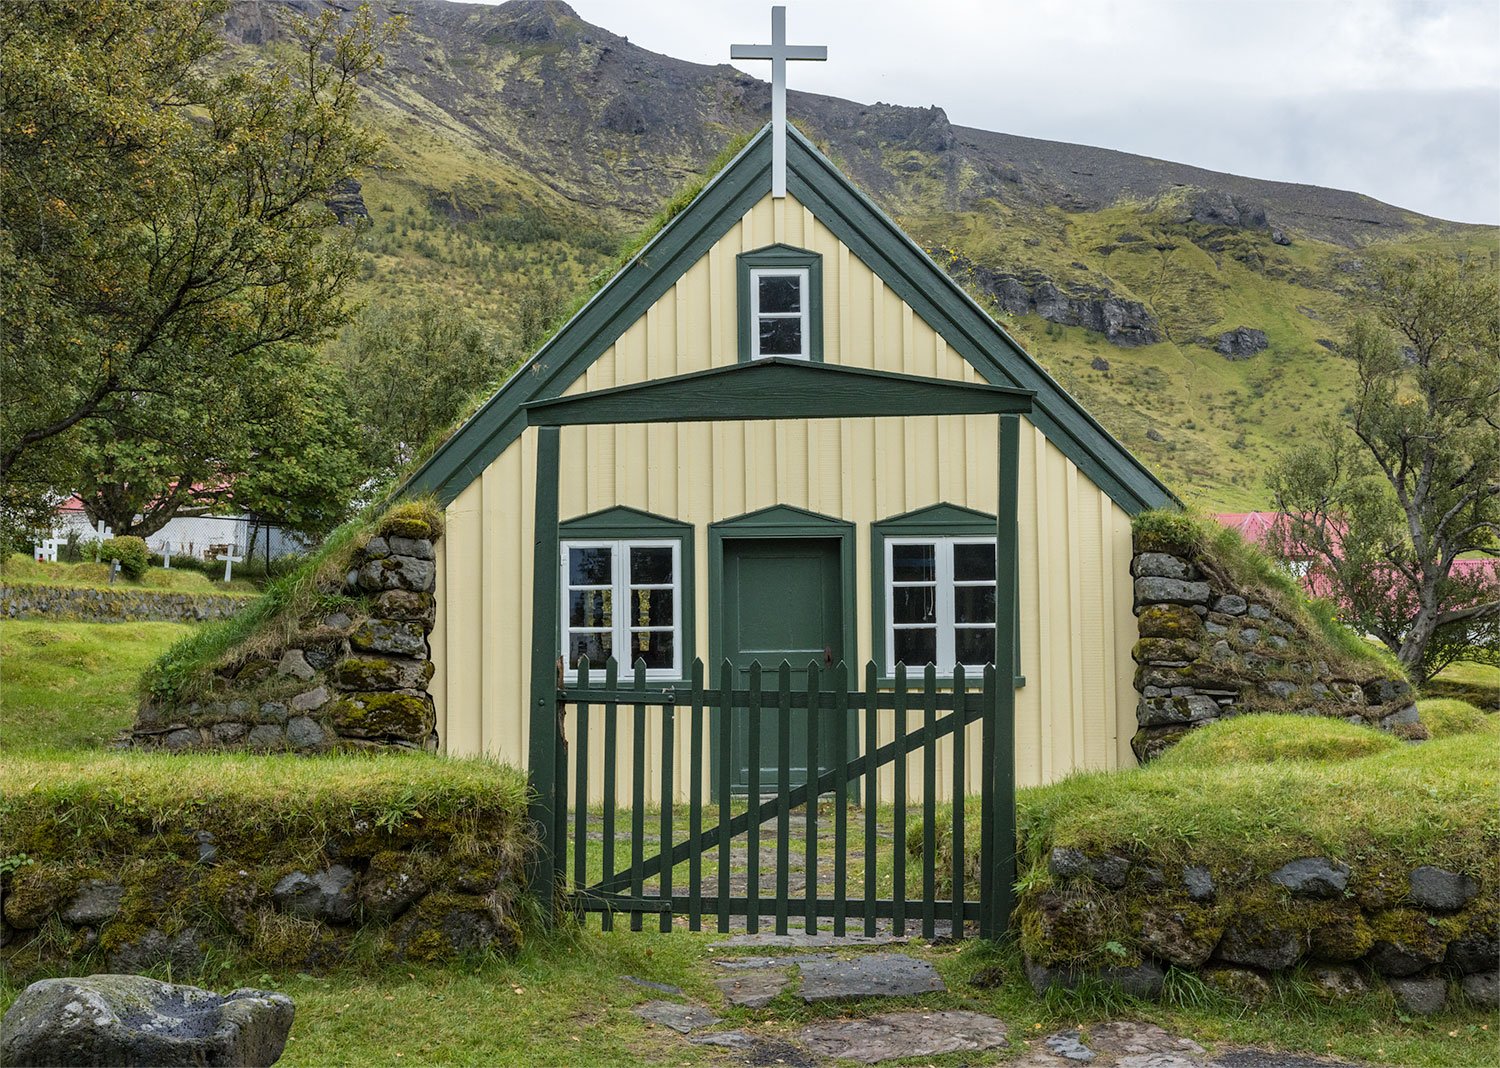 Hofskirkja Turf Church. Iceland, 2022